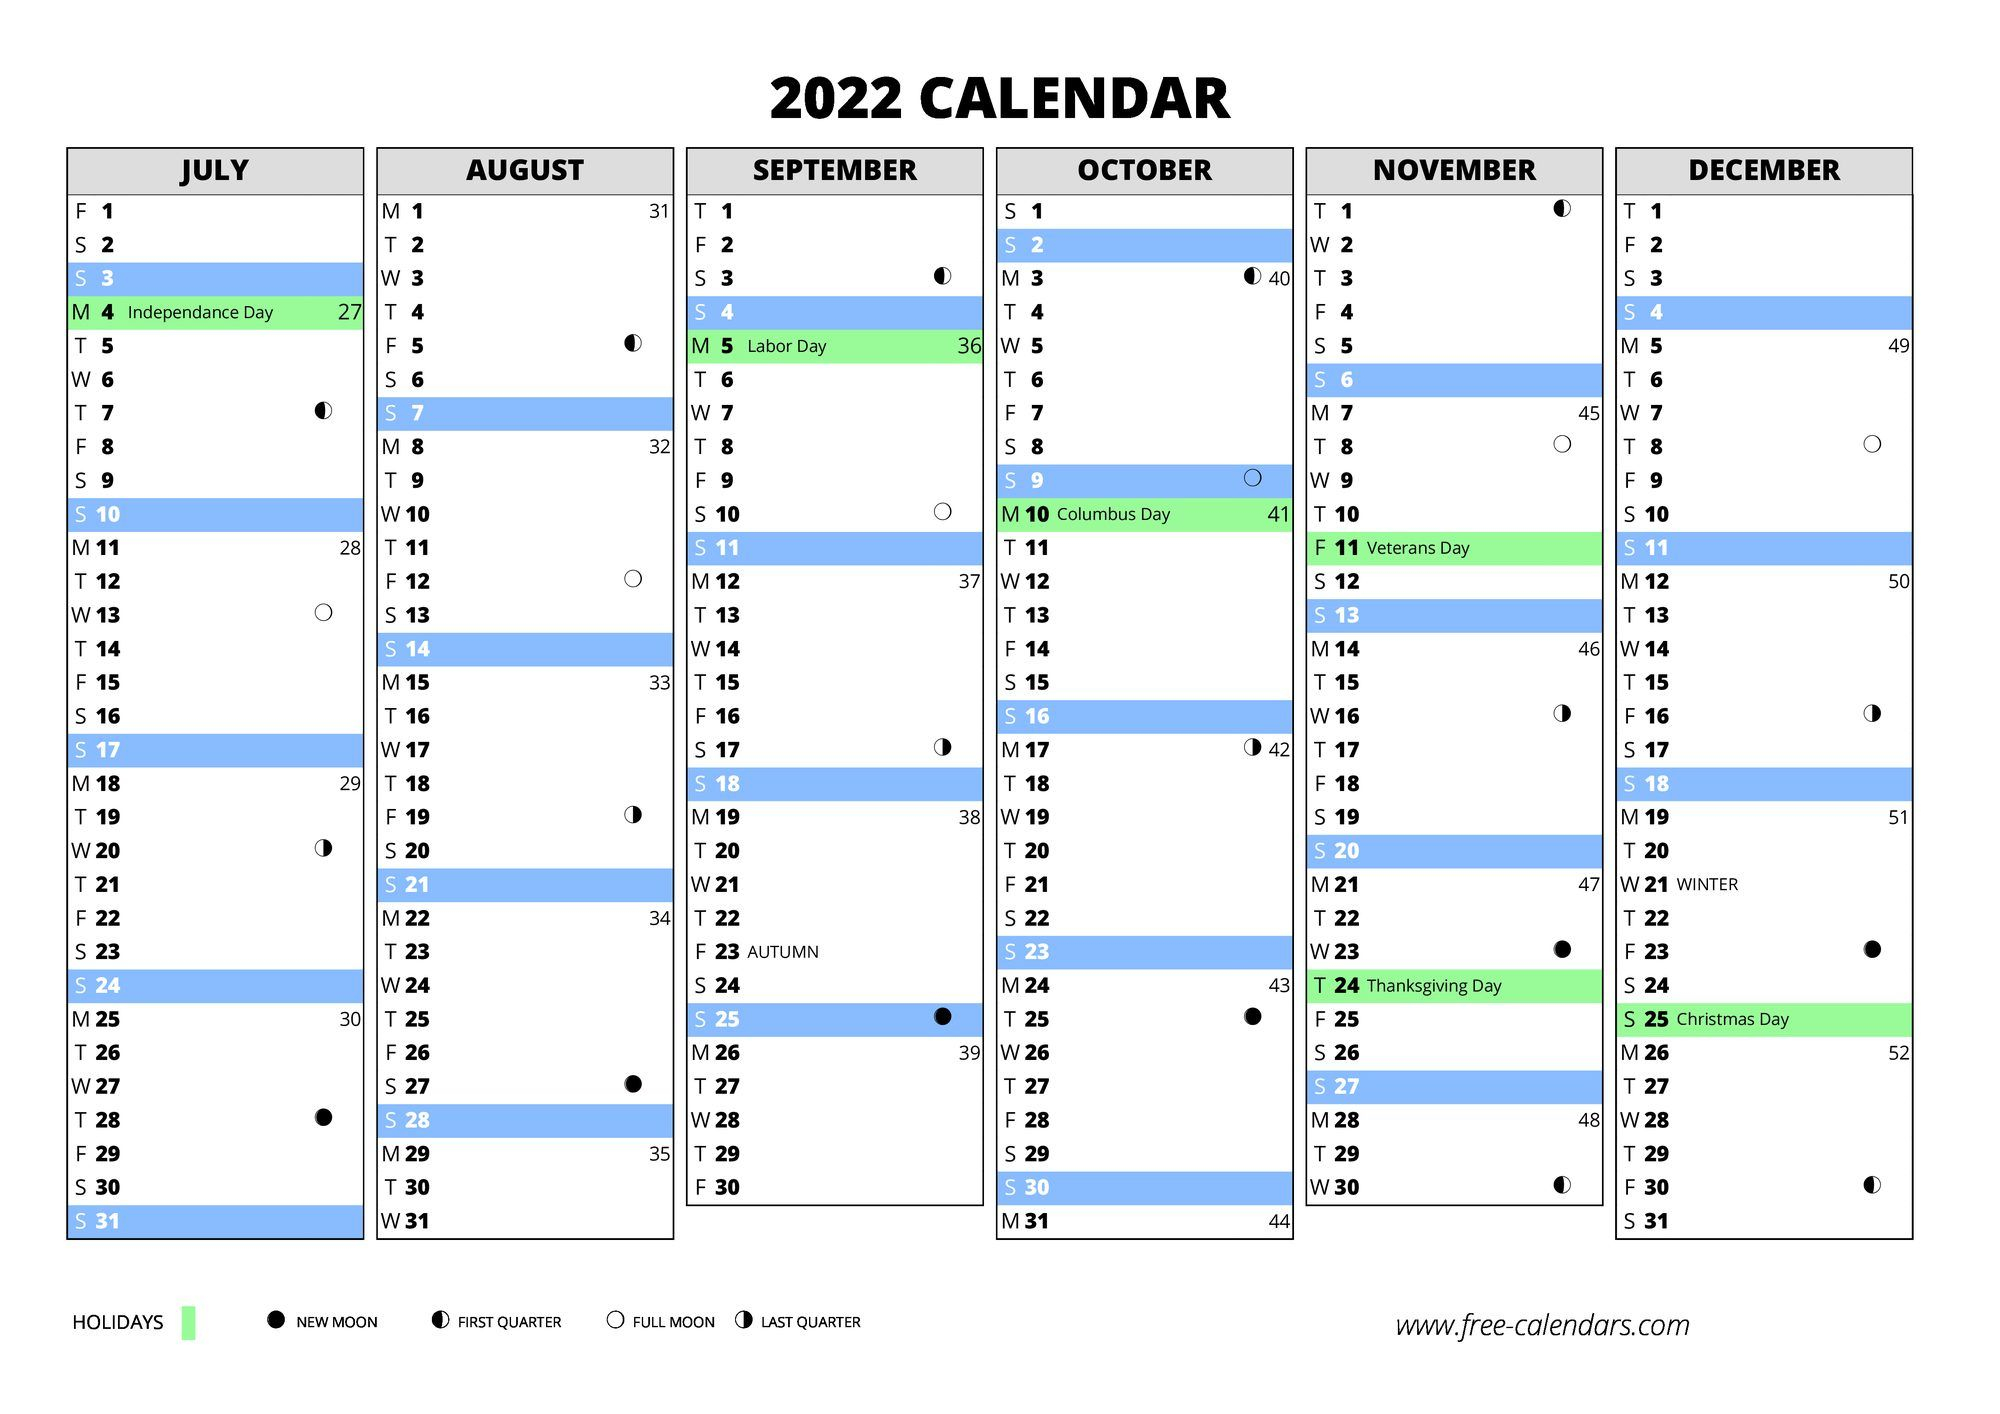 Moon Calendar 2022 February - Latest News Update